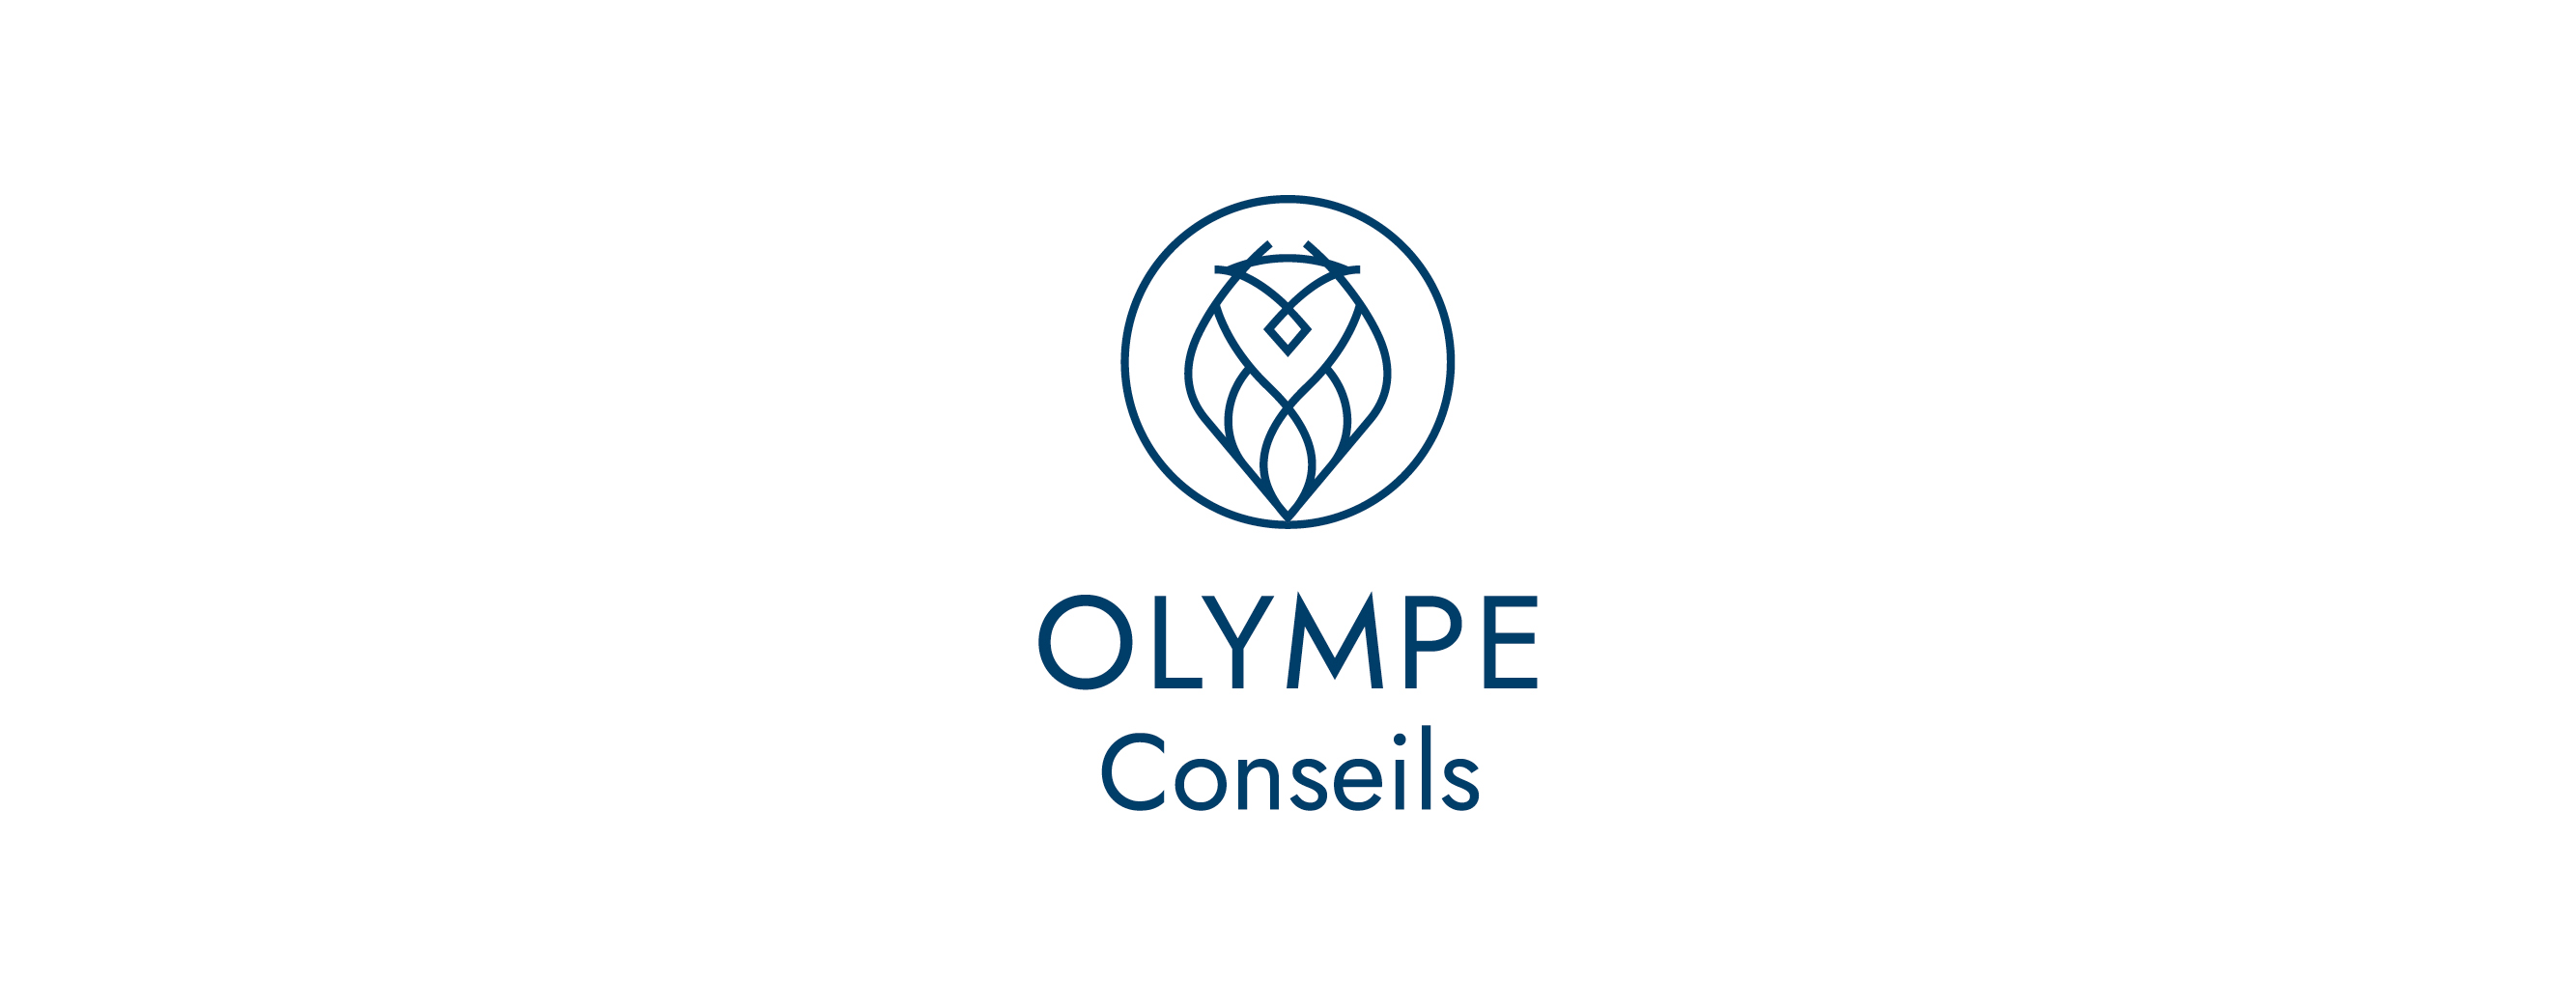 Olympe Conseils - slide9